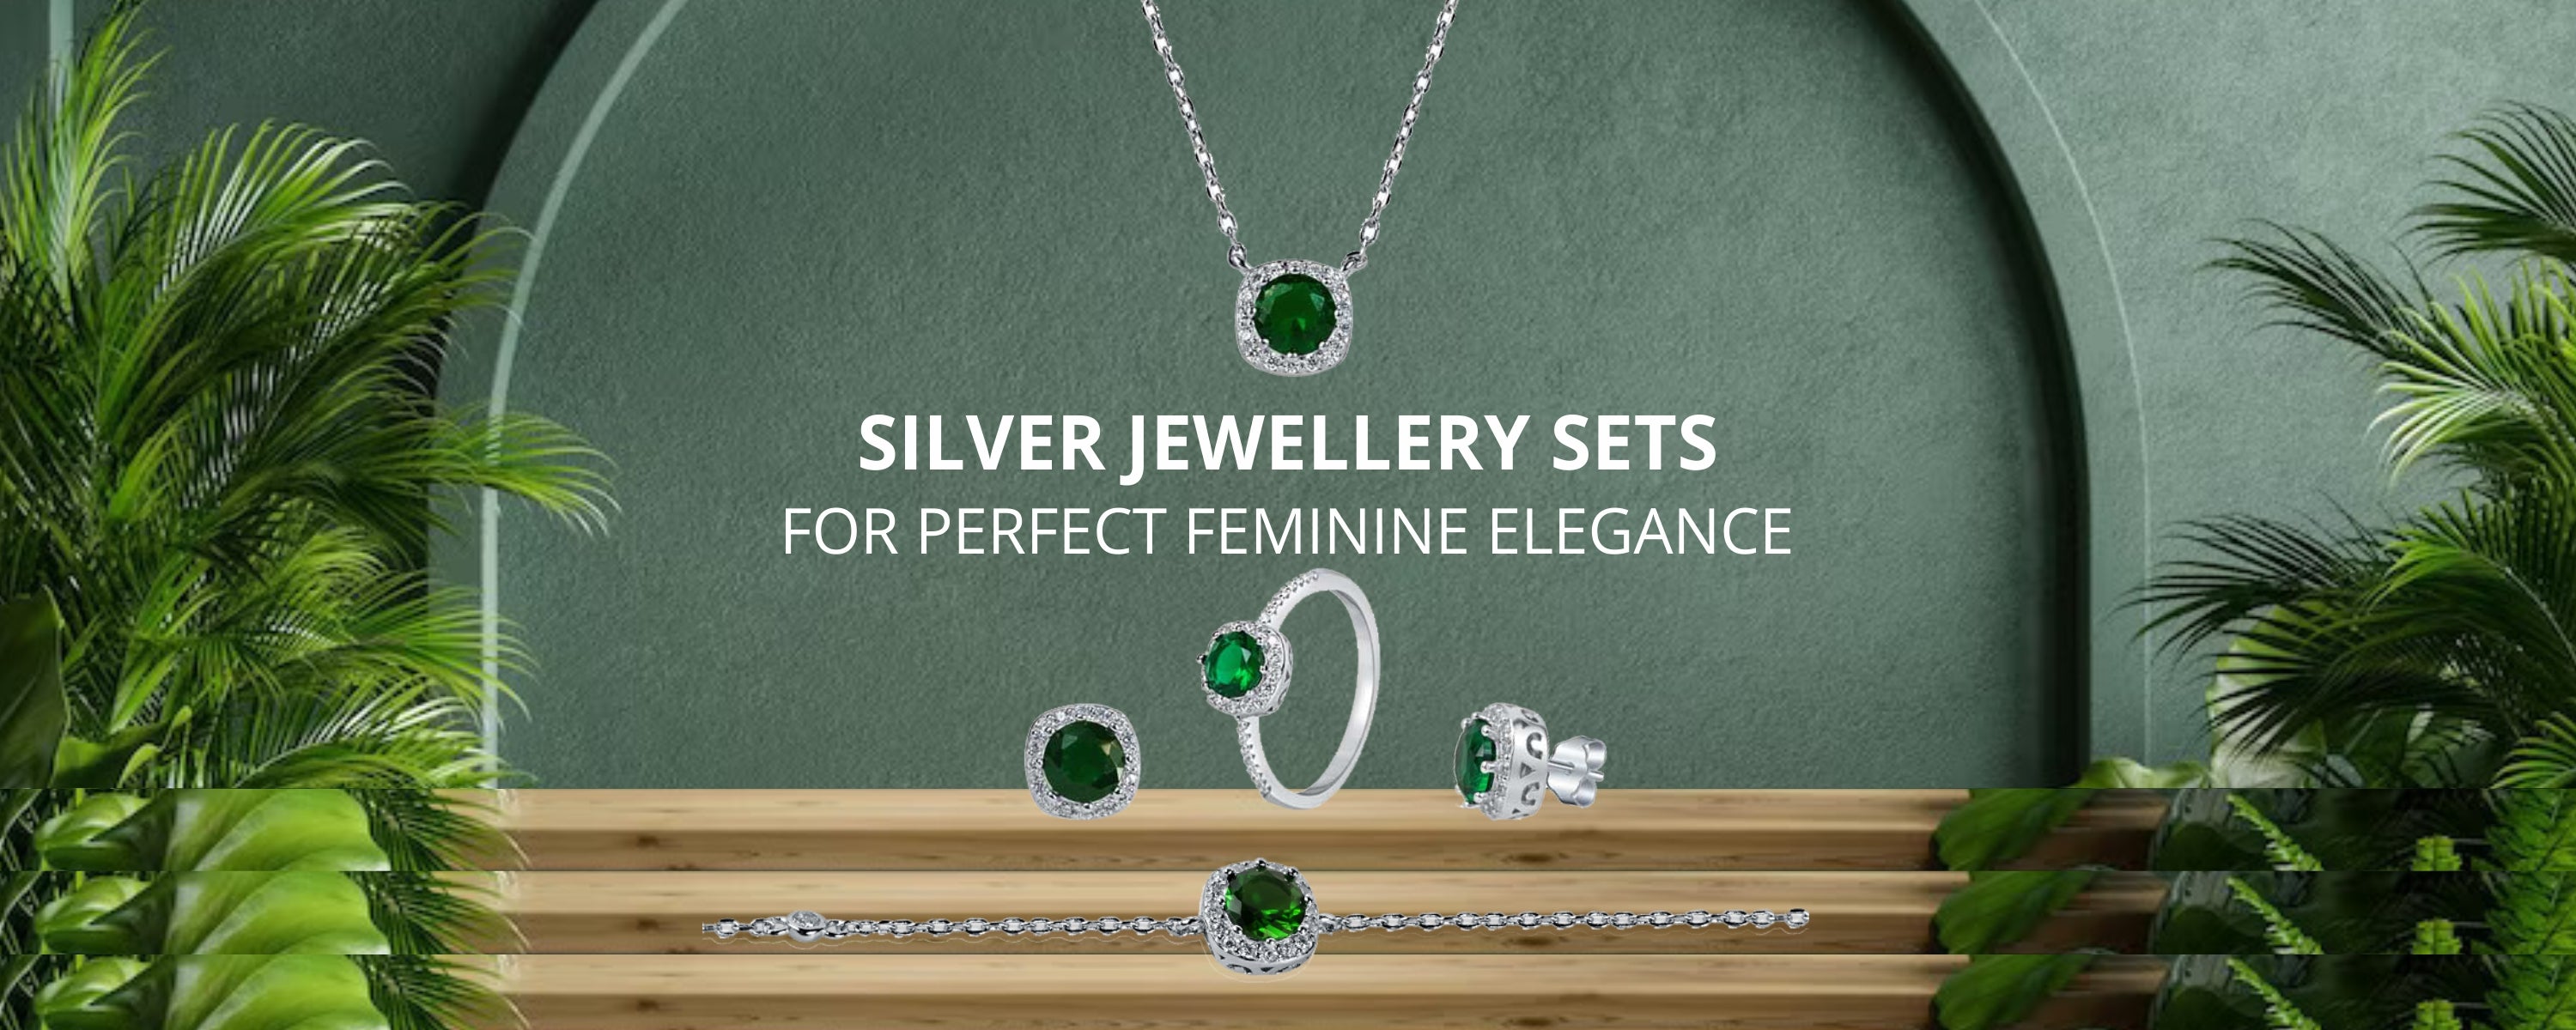 Silver Jewellery Sets from Raajraani for Perfect Feminine Elegance